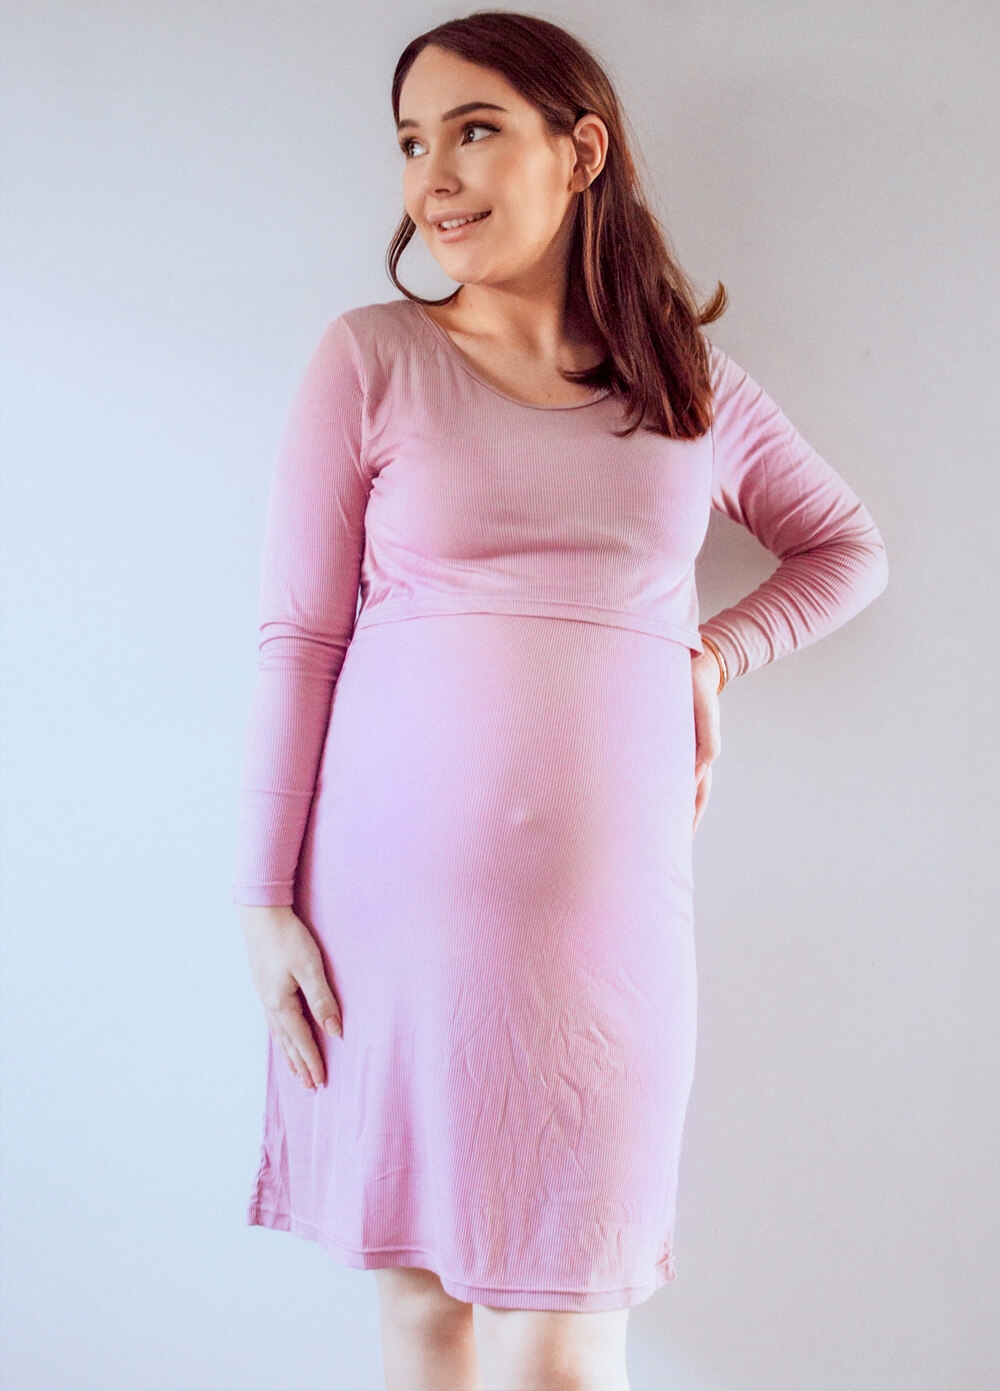 Lait & Co - Nadaleine Maternity Nightie & Robe Set in Pink